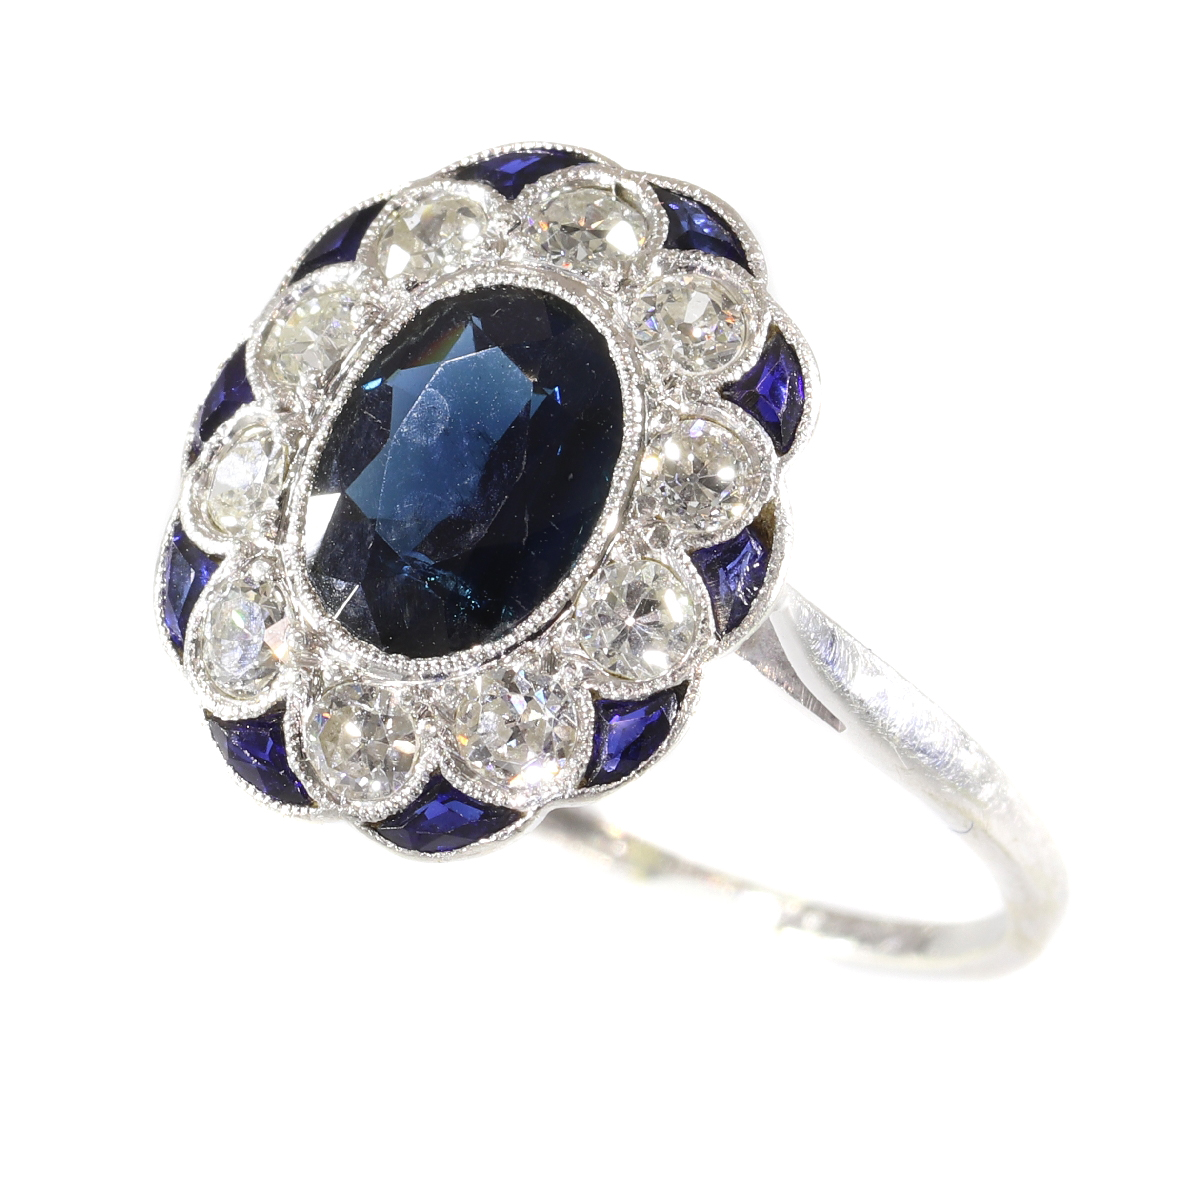 Charming original Art Deco vintage diamond and sapphire engagement ring